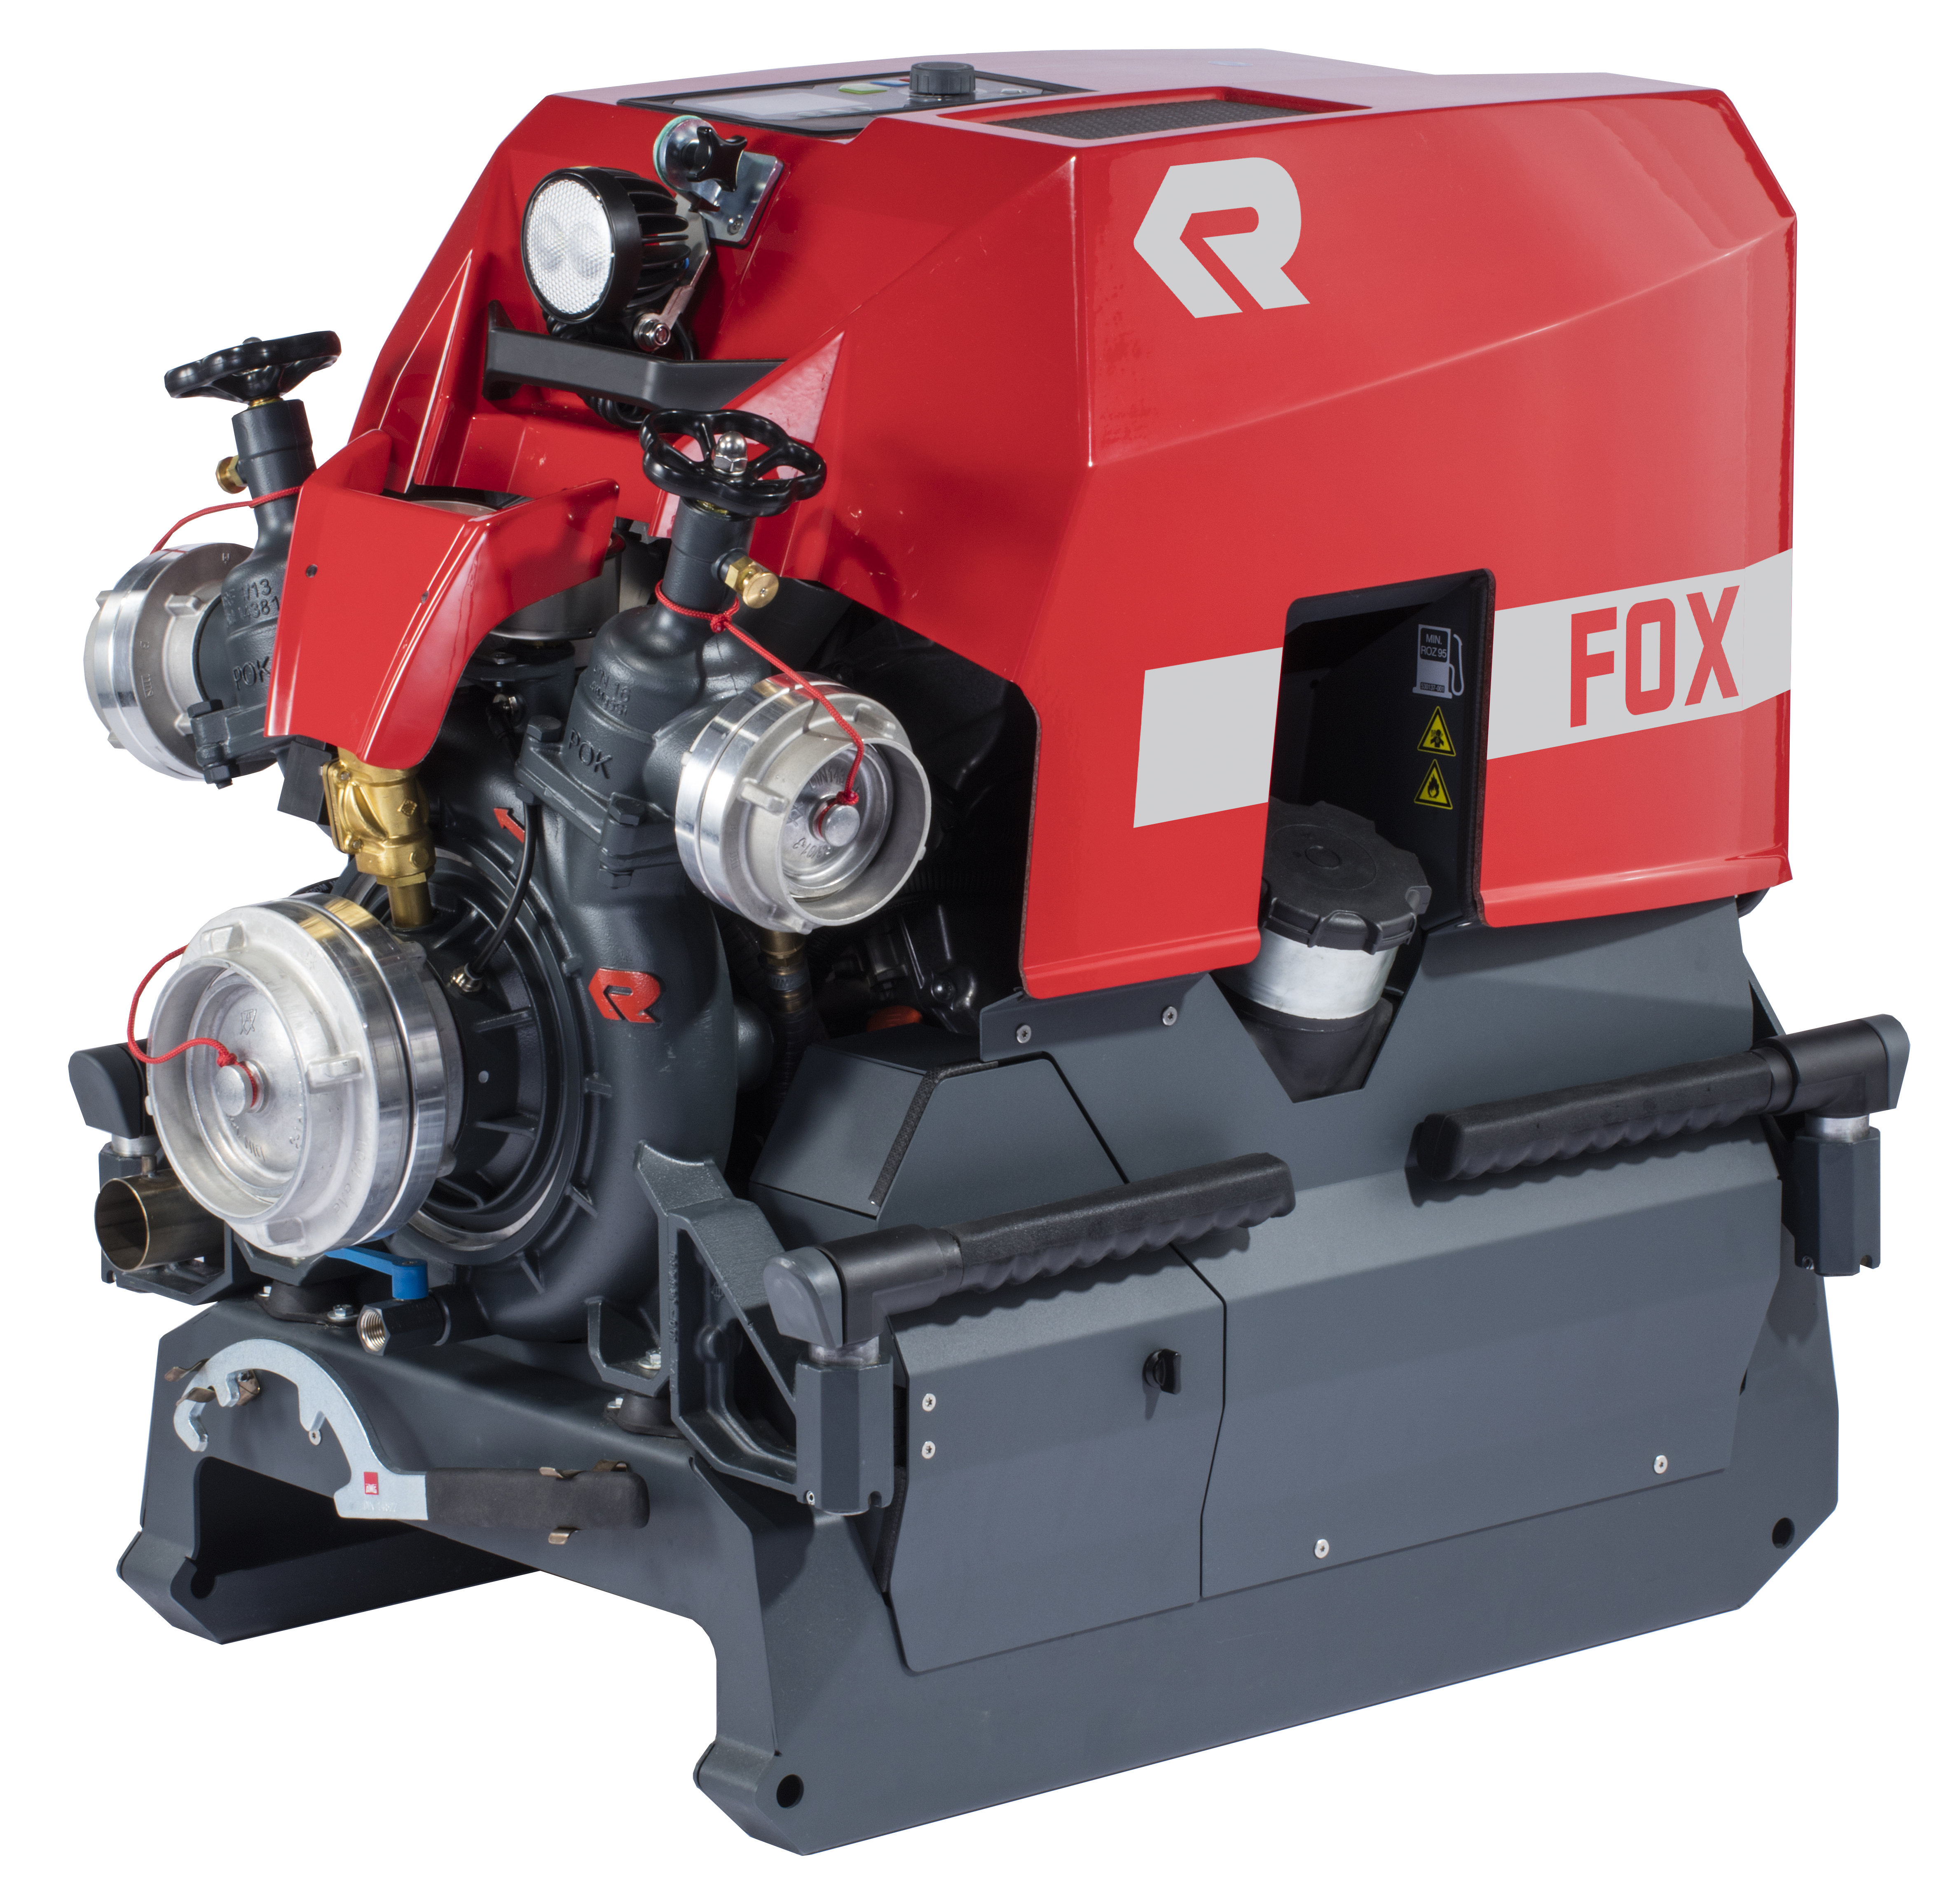 Rosenbauer Tragkraftspritze FOX 4 PFPN 10-1500 mit Bedienpanel LCS 2.0 oben Länderausführung DE zertifiziert nach EN 14466